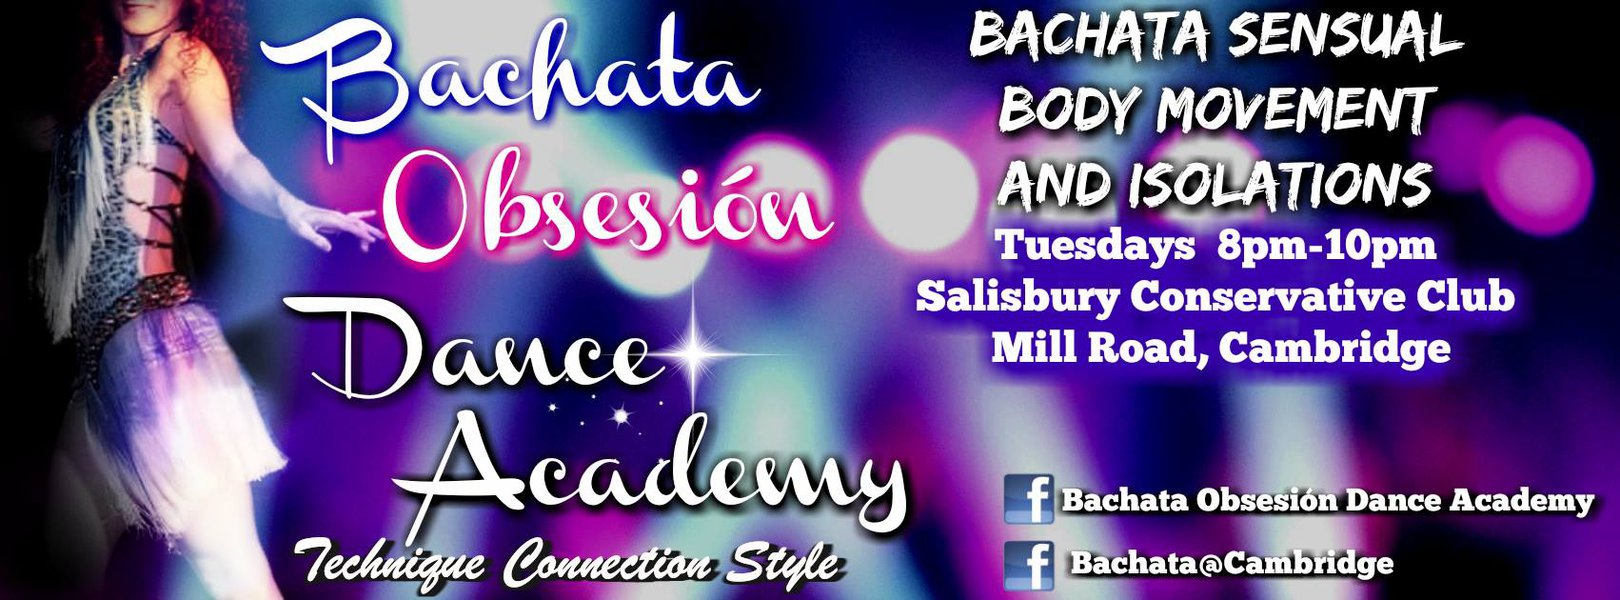 events_dance_academy.jpg